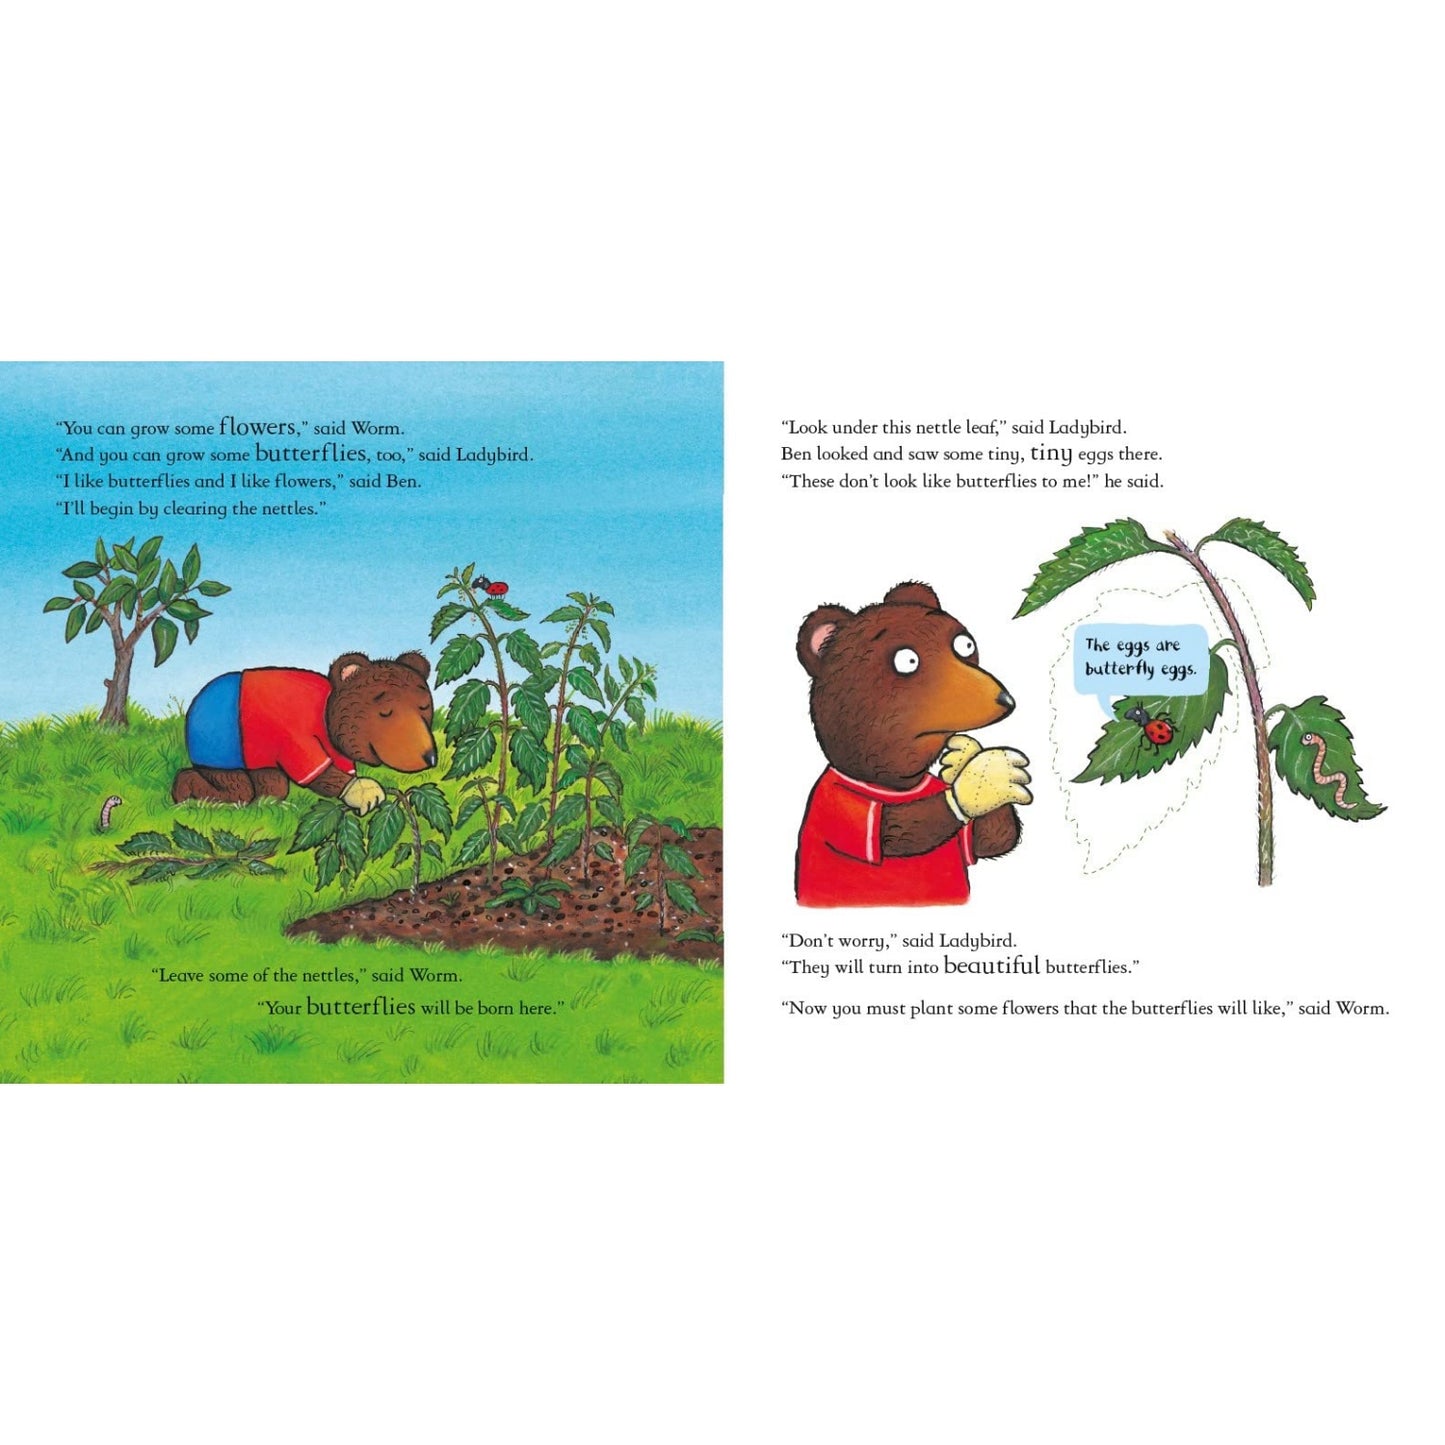 Ben Plants a Butterfly Garden | Hardcover | Children’s Book on Nature